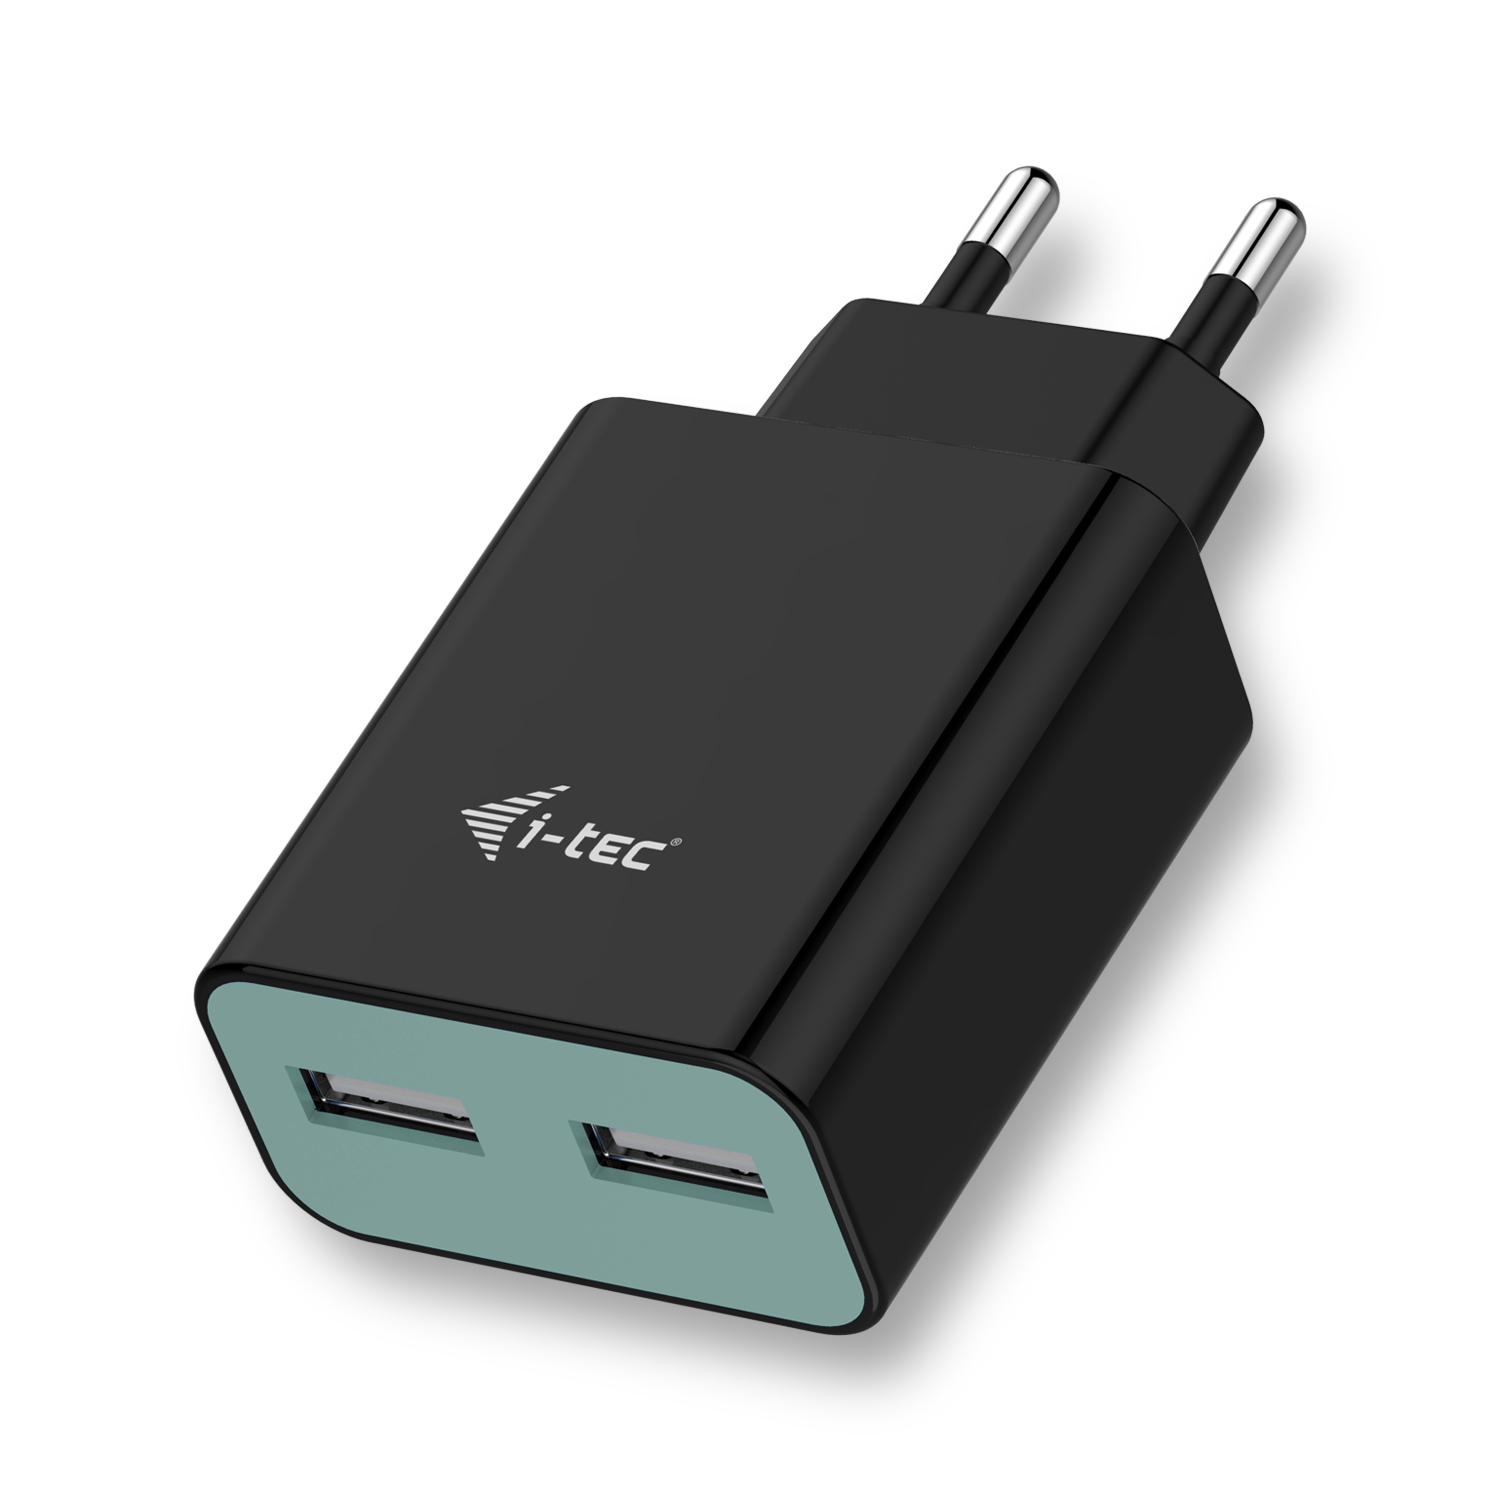 i-tec USB Power Charger 2 Port 2.4 Black